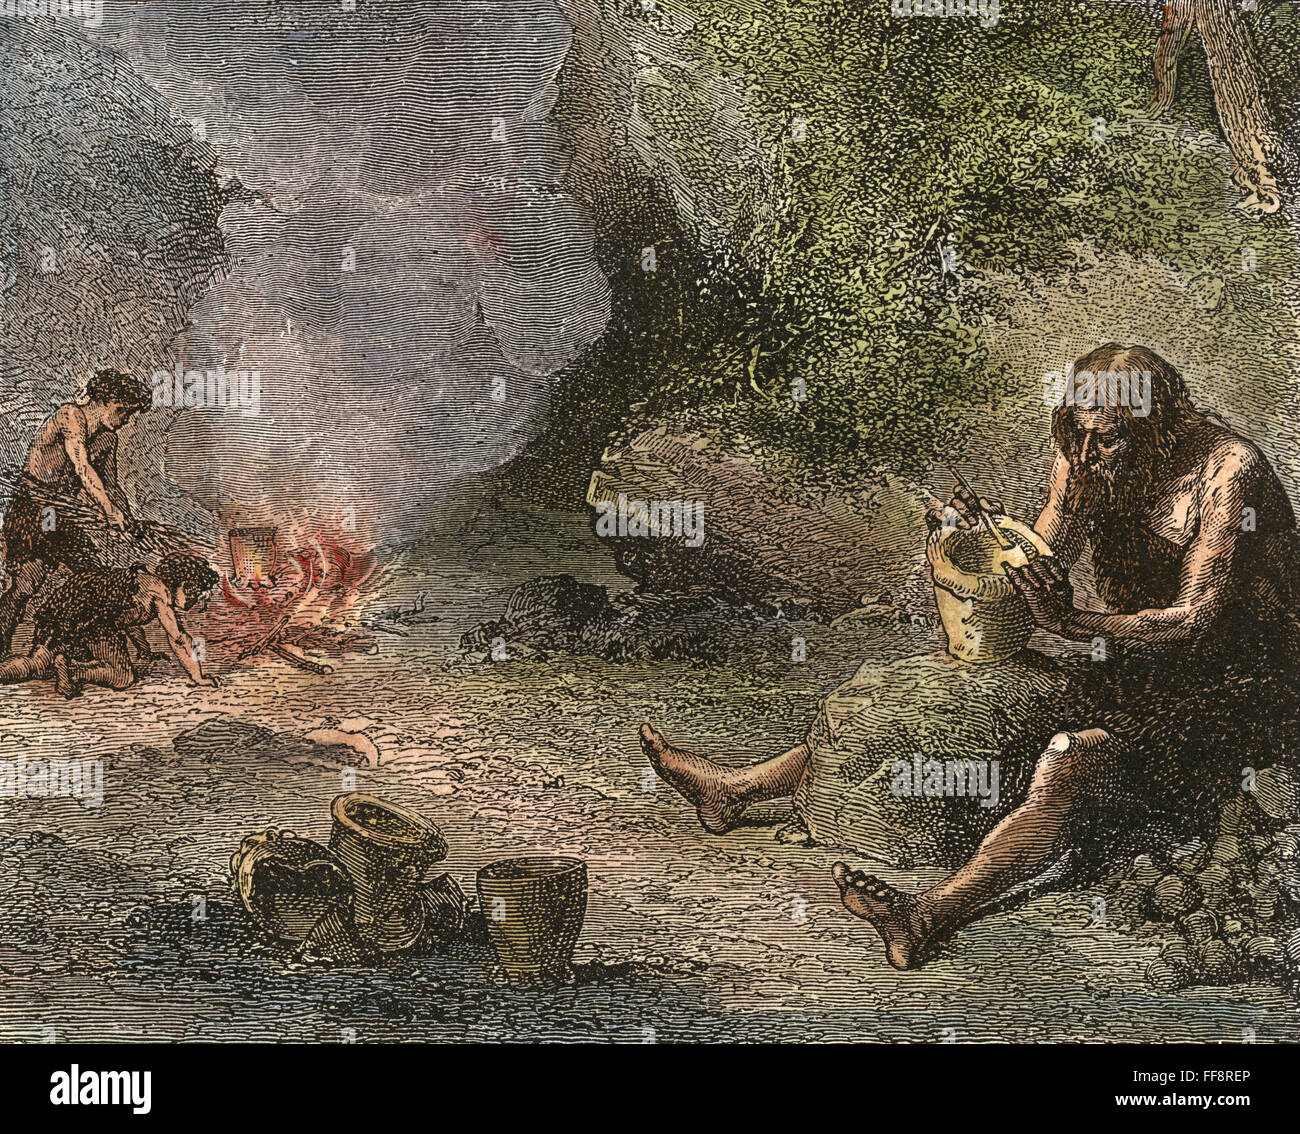 URMENSCHEN: KERAMIK. /nPrehistoric Mann Gestaltung einen Kochtopf aus Ton, Gravur, 19. Jahrhundert. Stockfoto